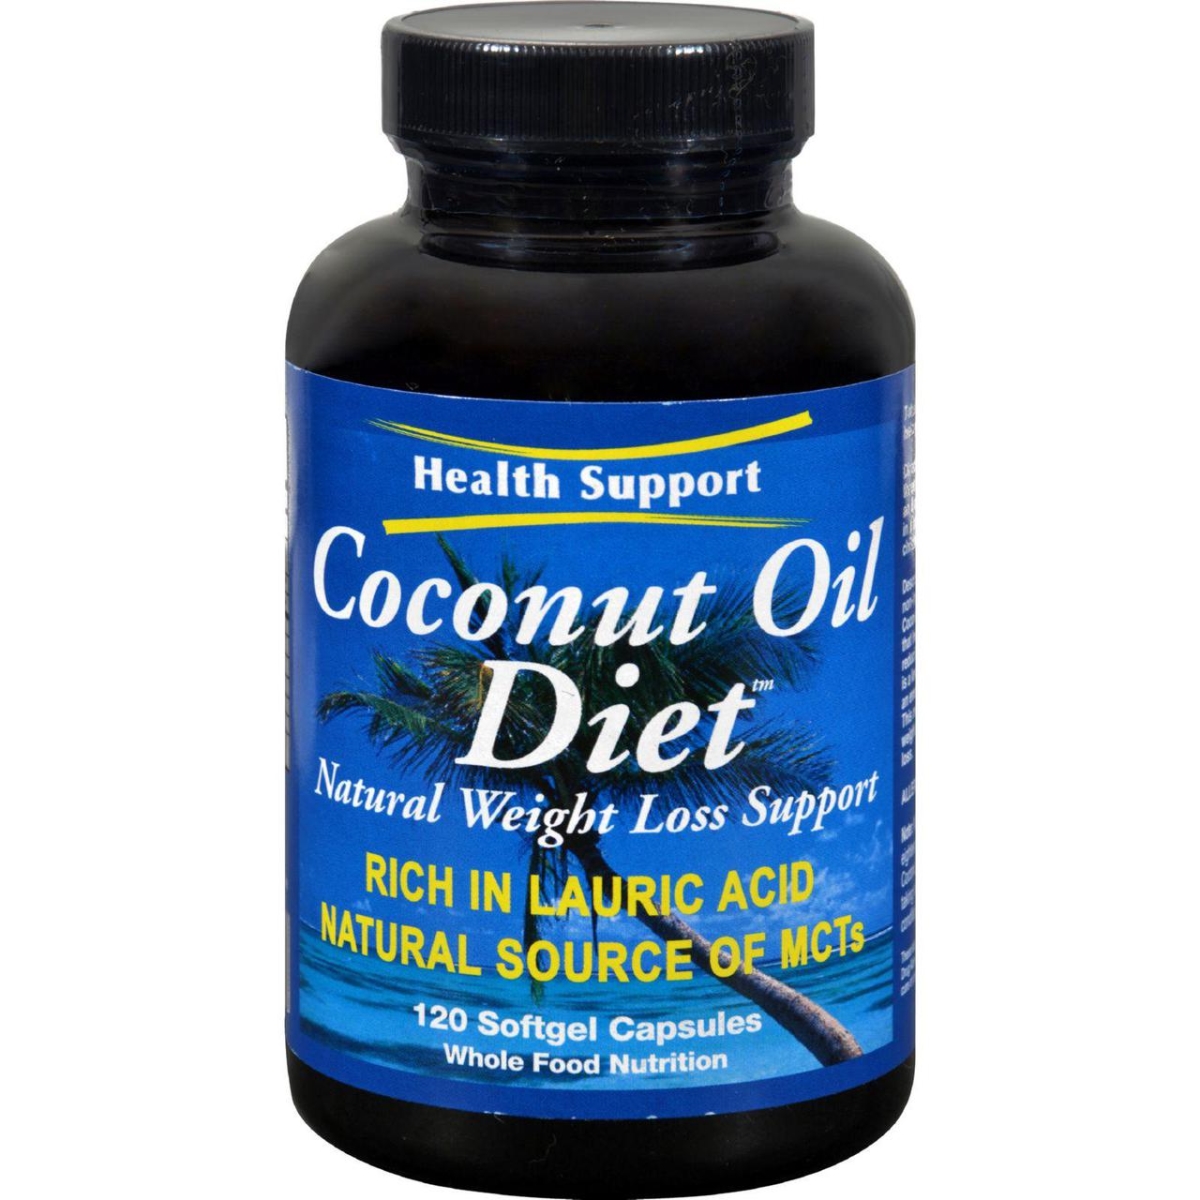 Hg0418178 Coconut Oil Diet - 120 Softgels